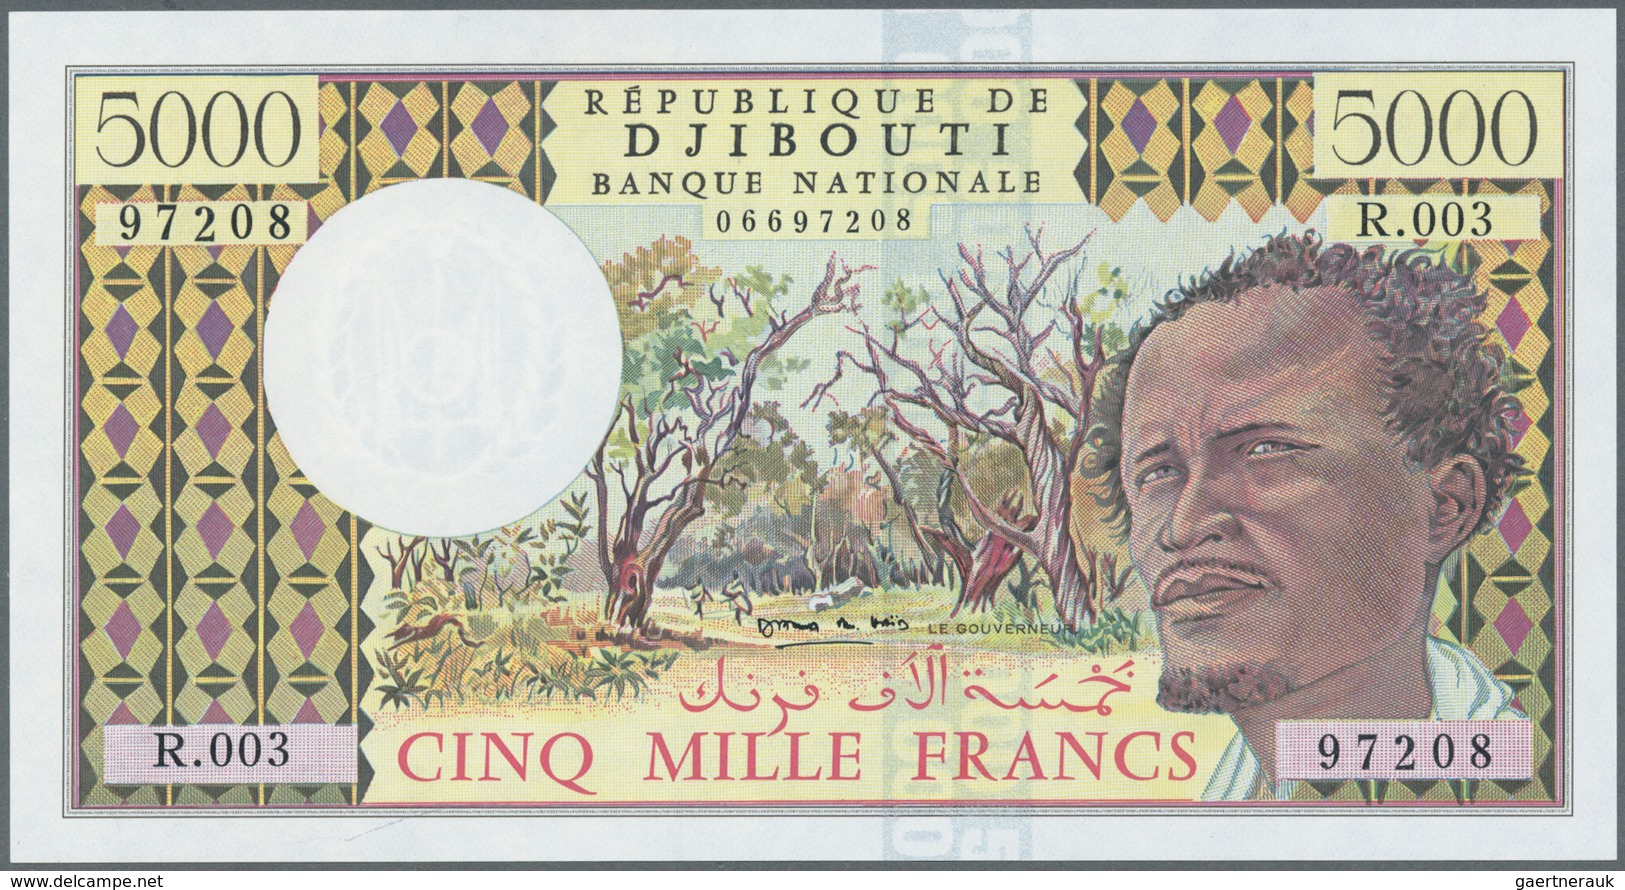 02938 Africa / Afrika: Collectors book with 110 Banknotes from Belgian Congo, Biafra, Botswana, Burundi, C